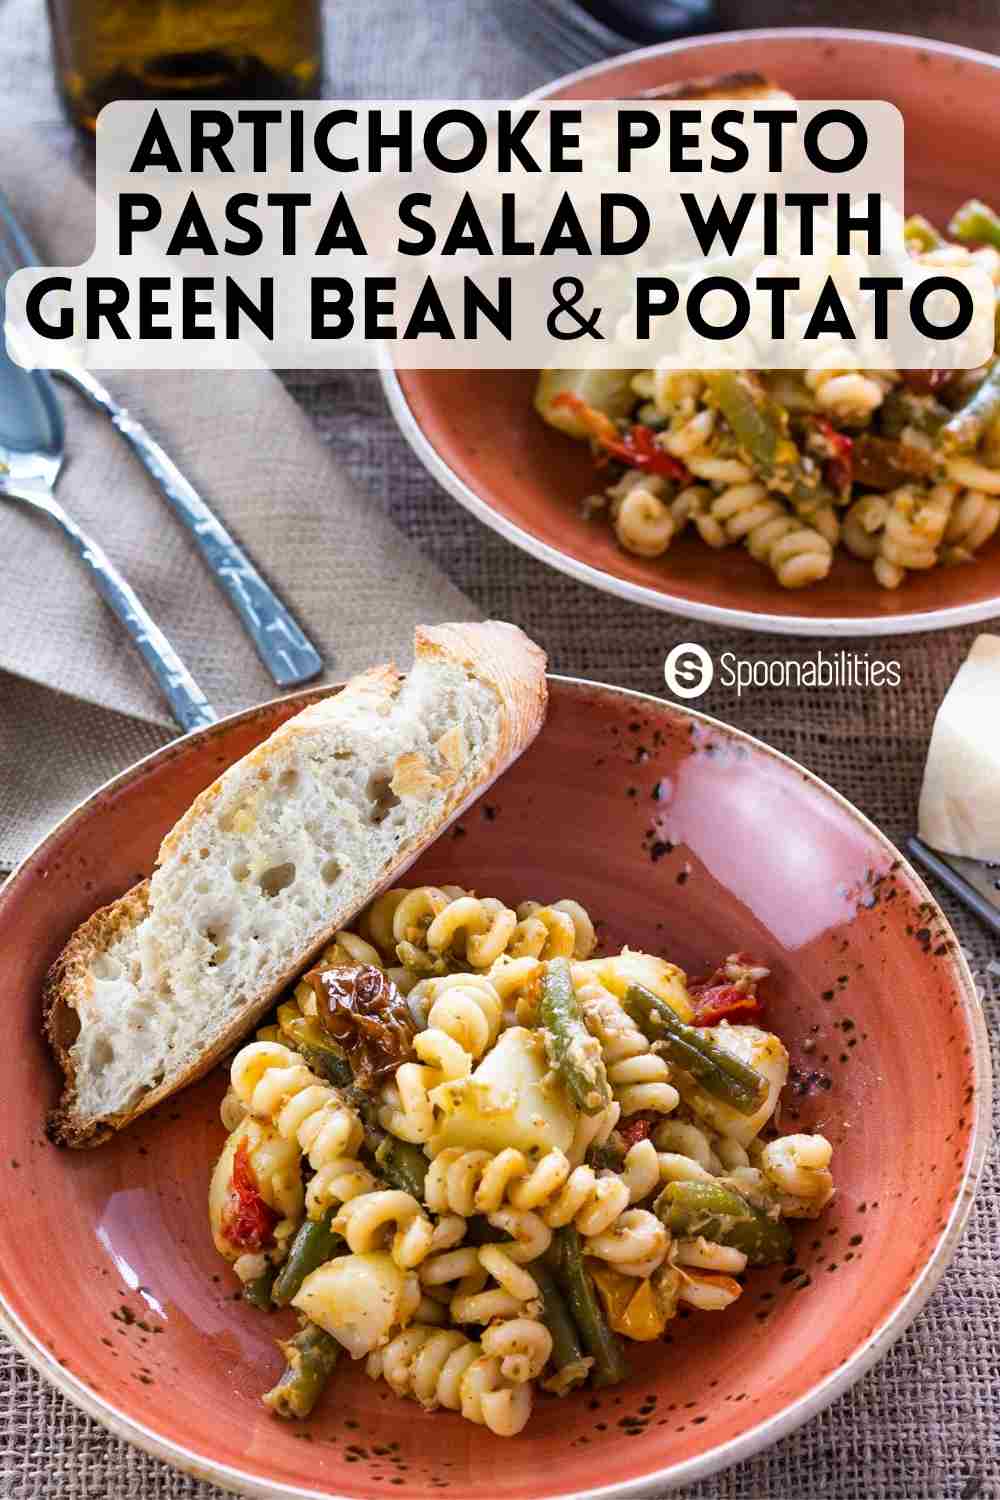 Artichoke Pesto Pasta Salad with Green Bean & Potato